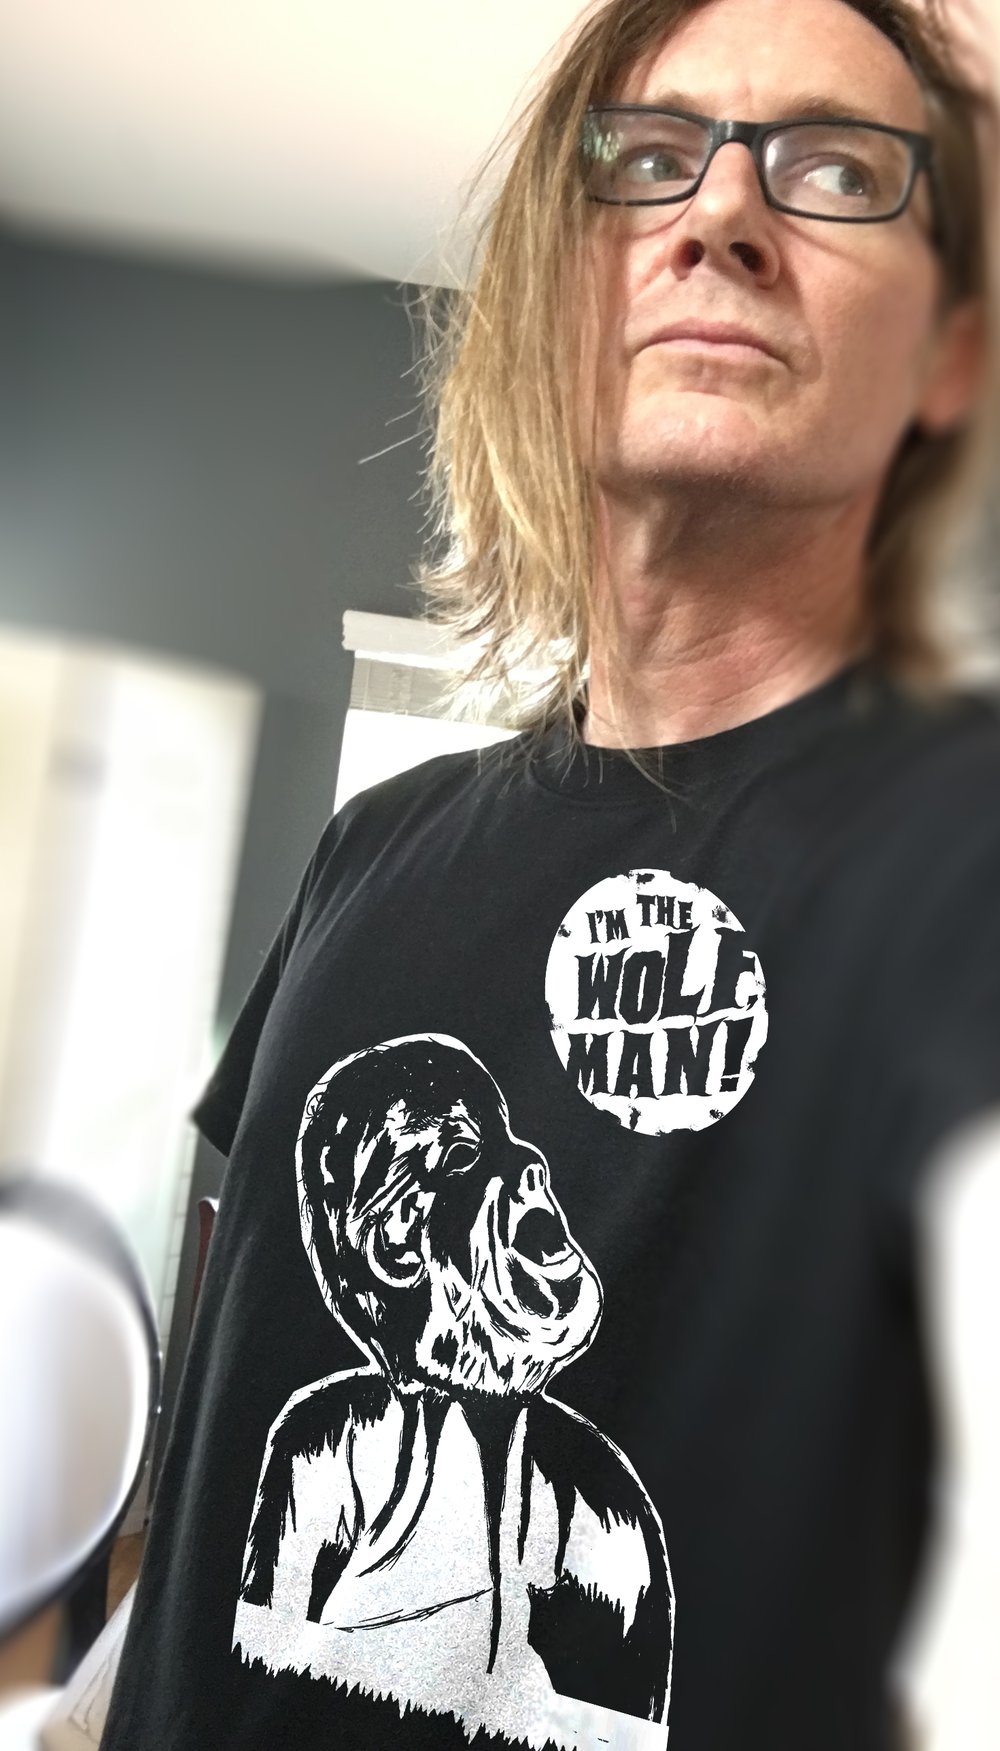 "I'm The Wolf, Man!" T-shirt